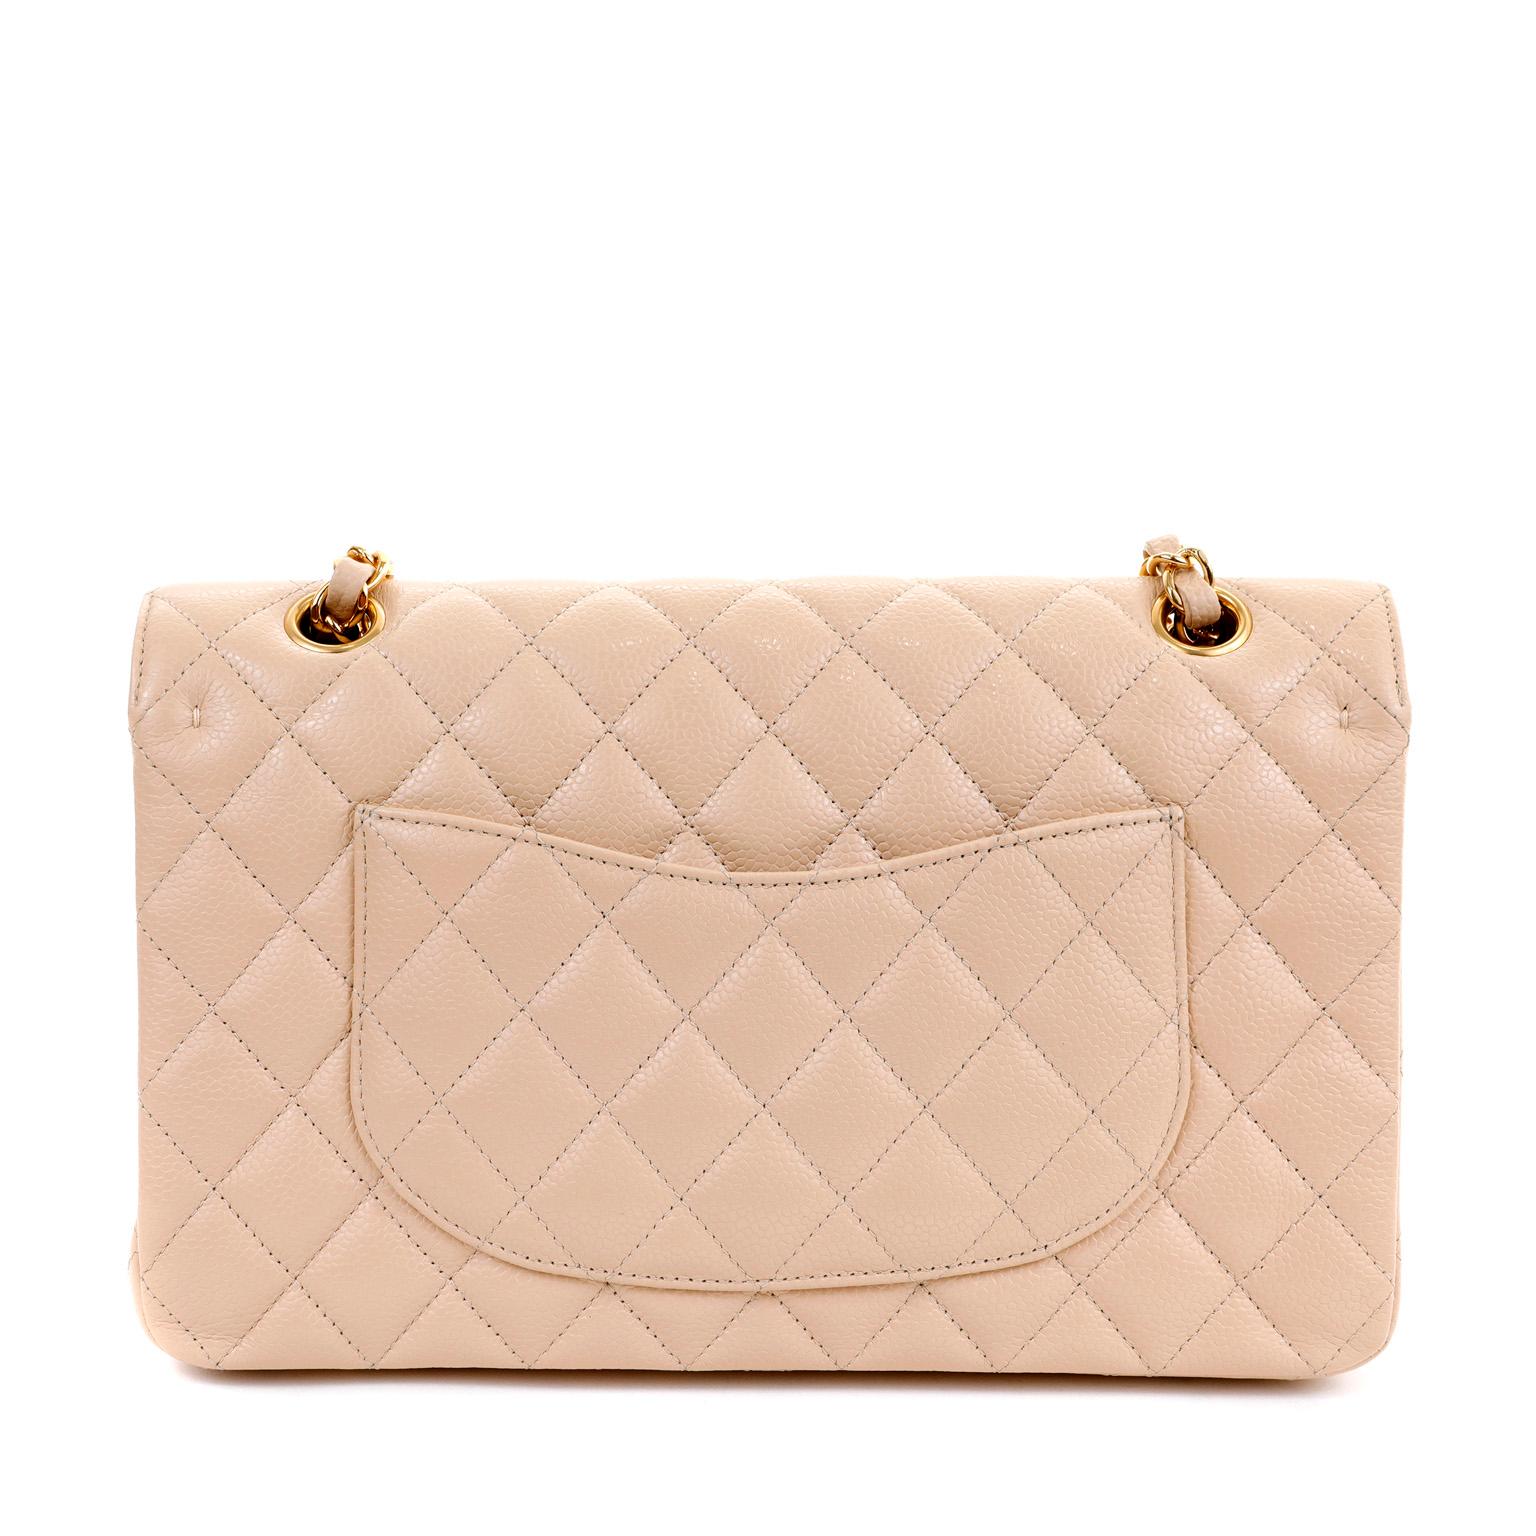 Women's Chanel Beige Clair Caviar Leather Medium Classic Flap Bag